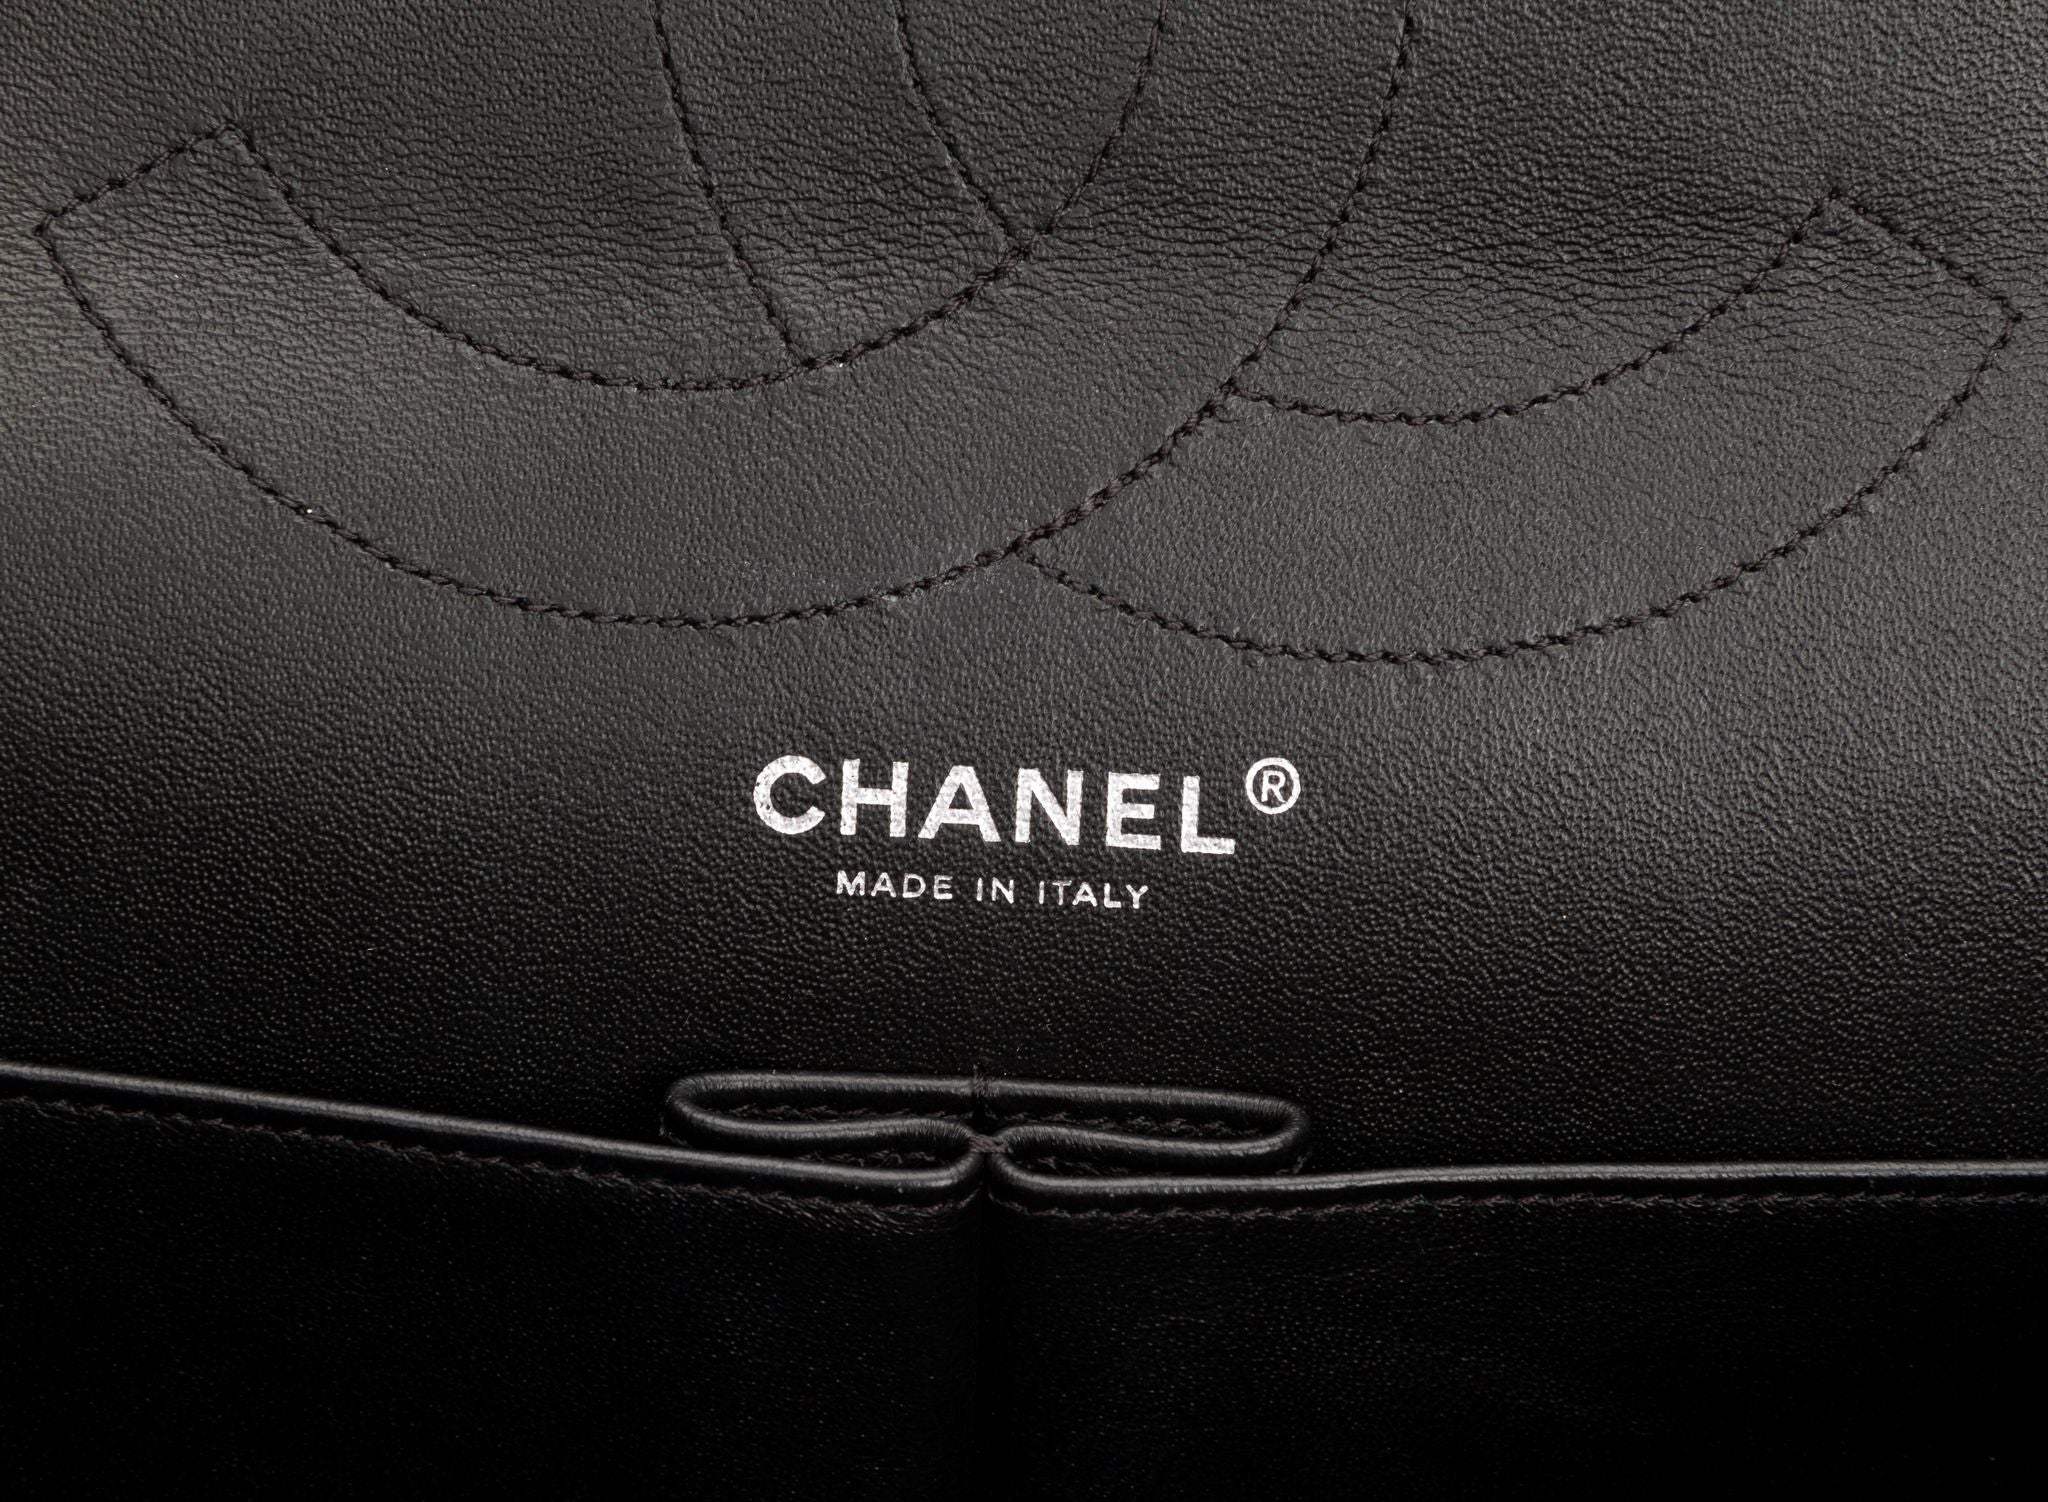 Chanel Rare So Black Reissue Jumbo Flap